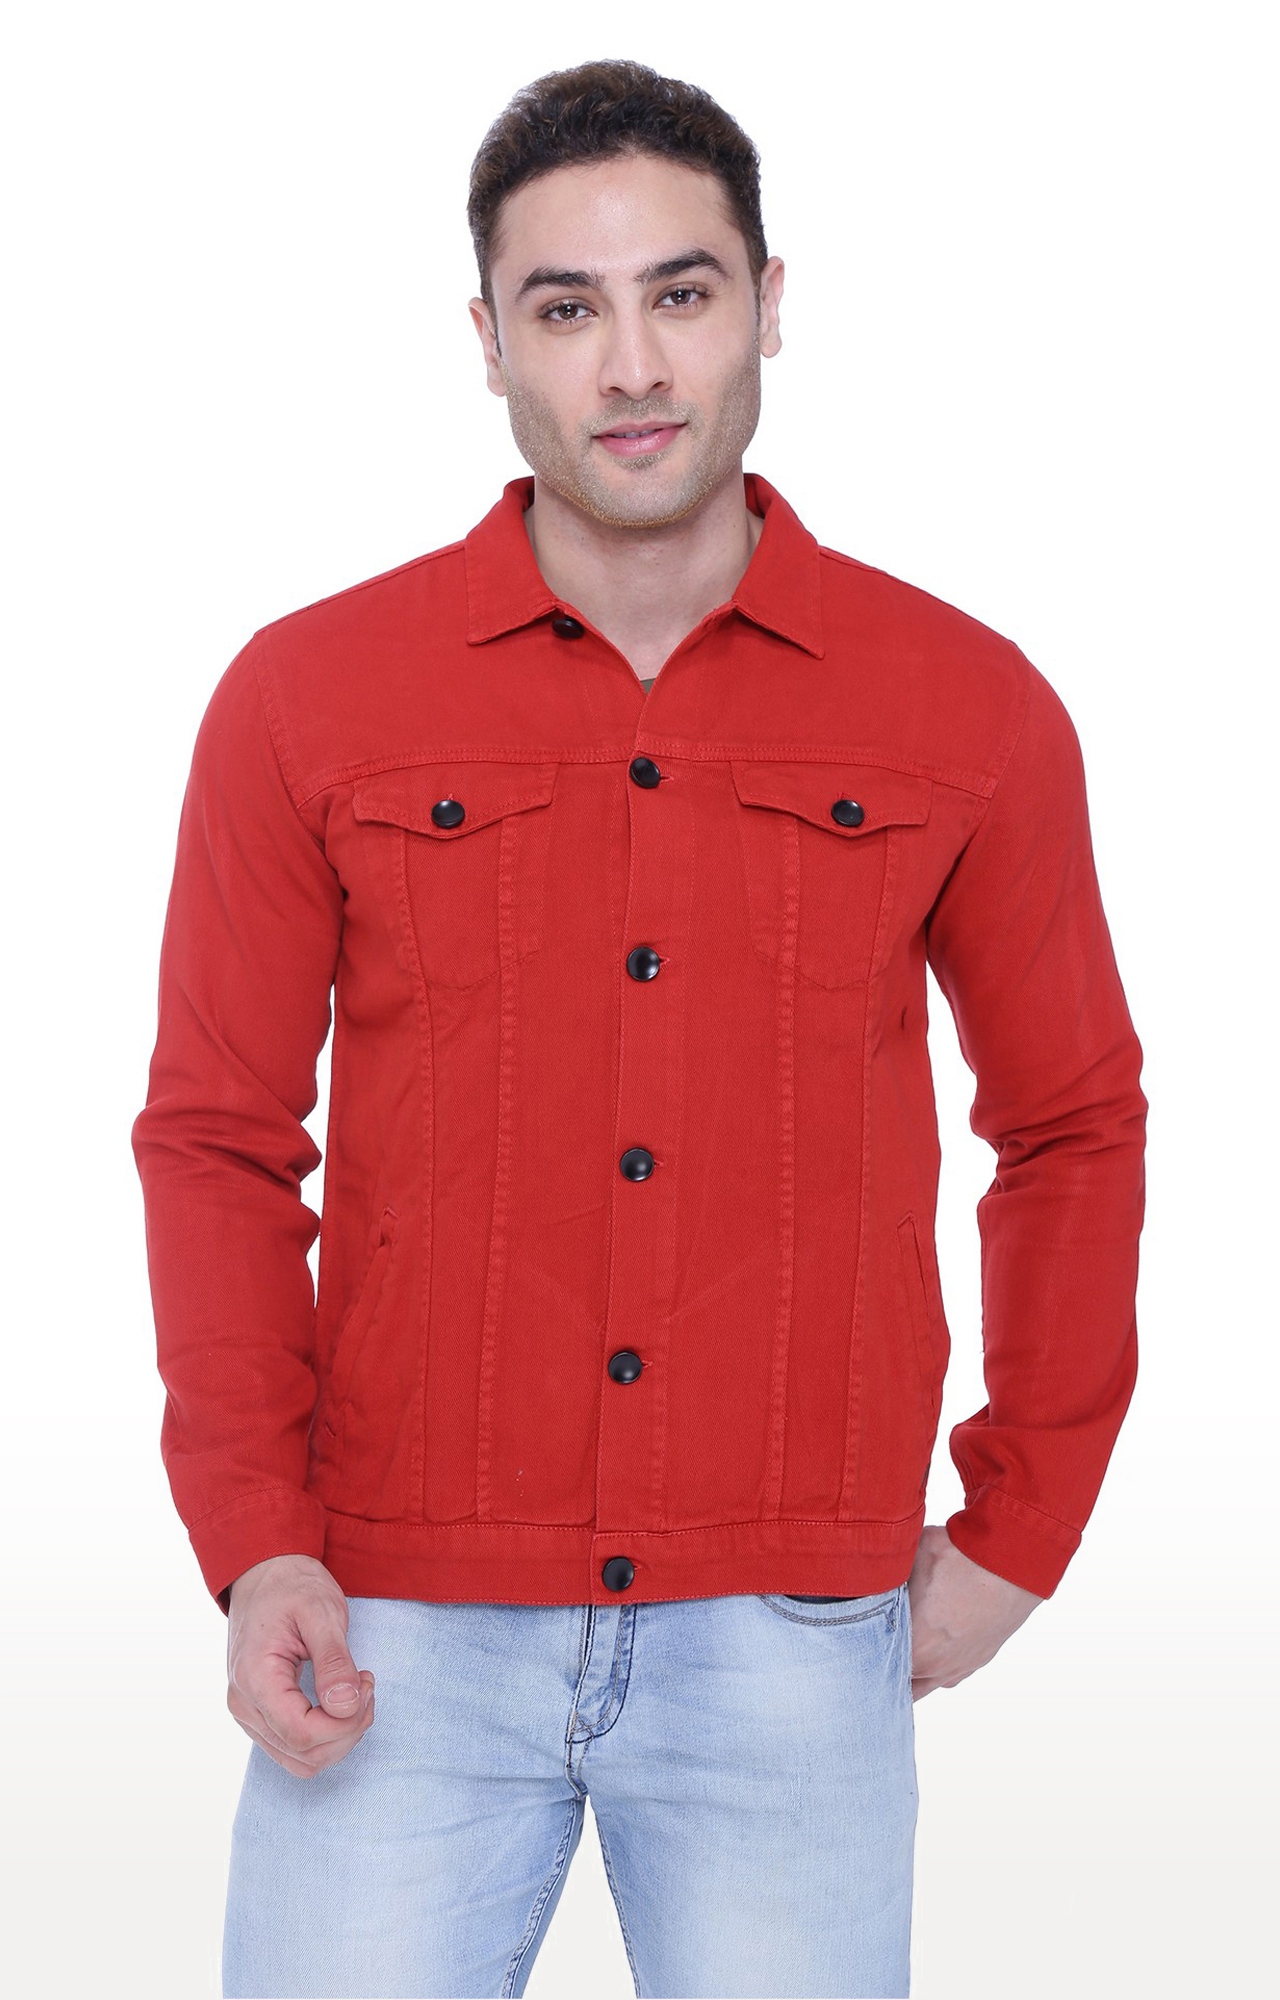 Kuons Avenue Men's Cherry Red Denim Jacket